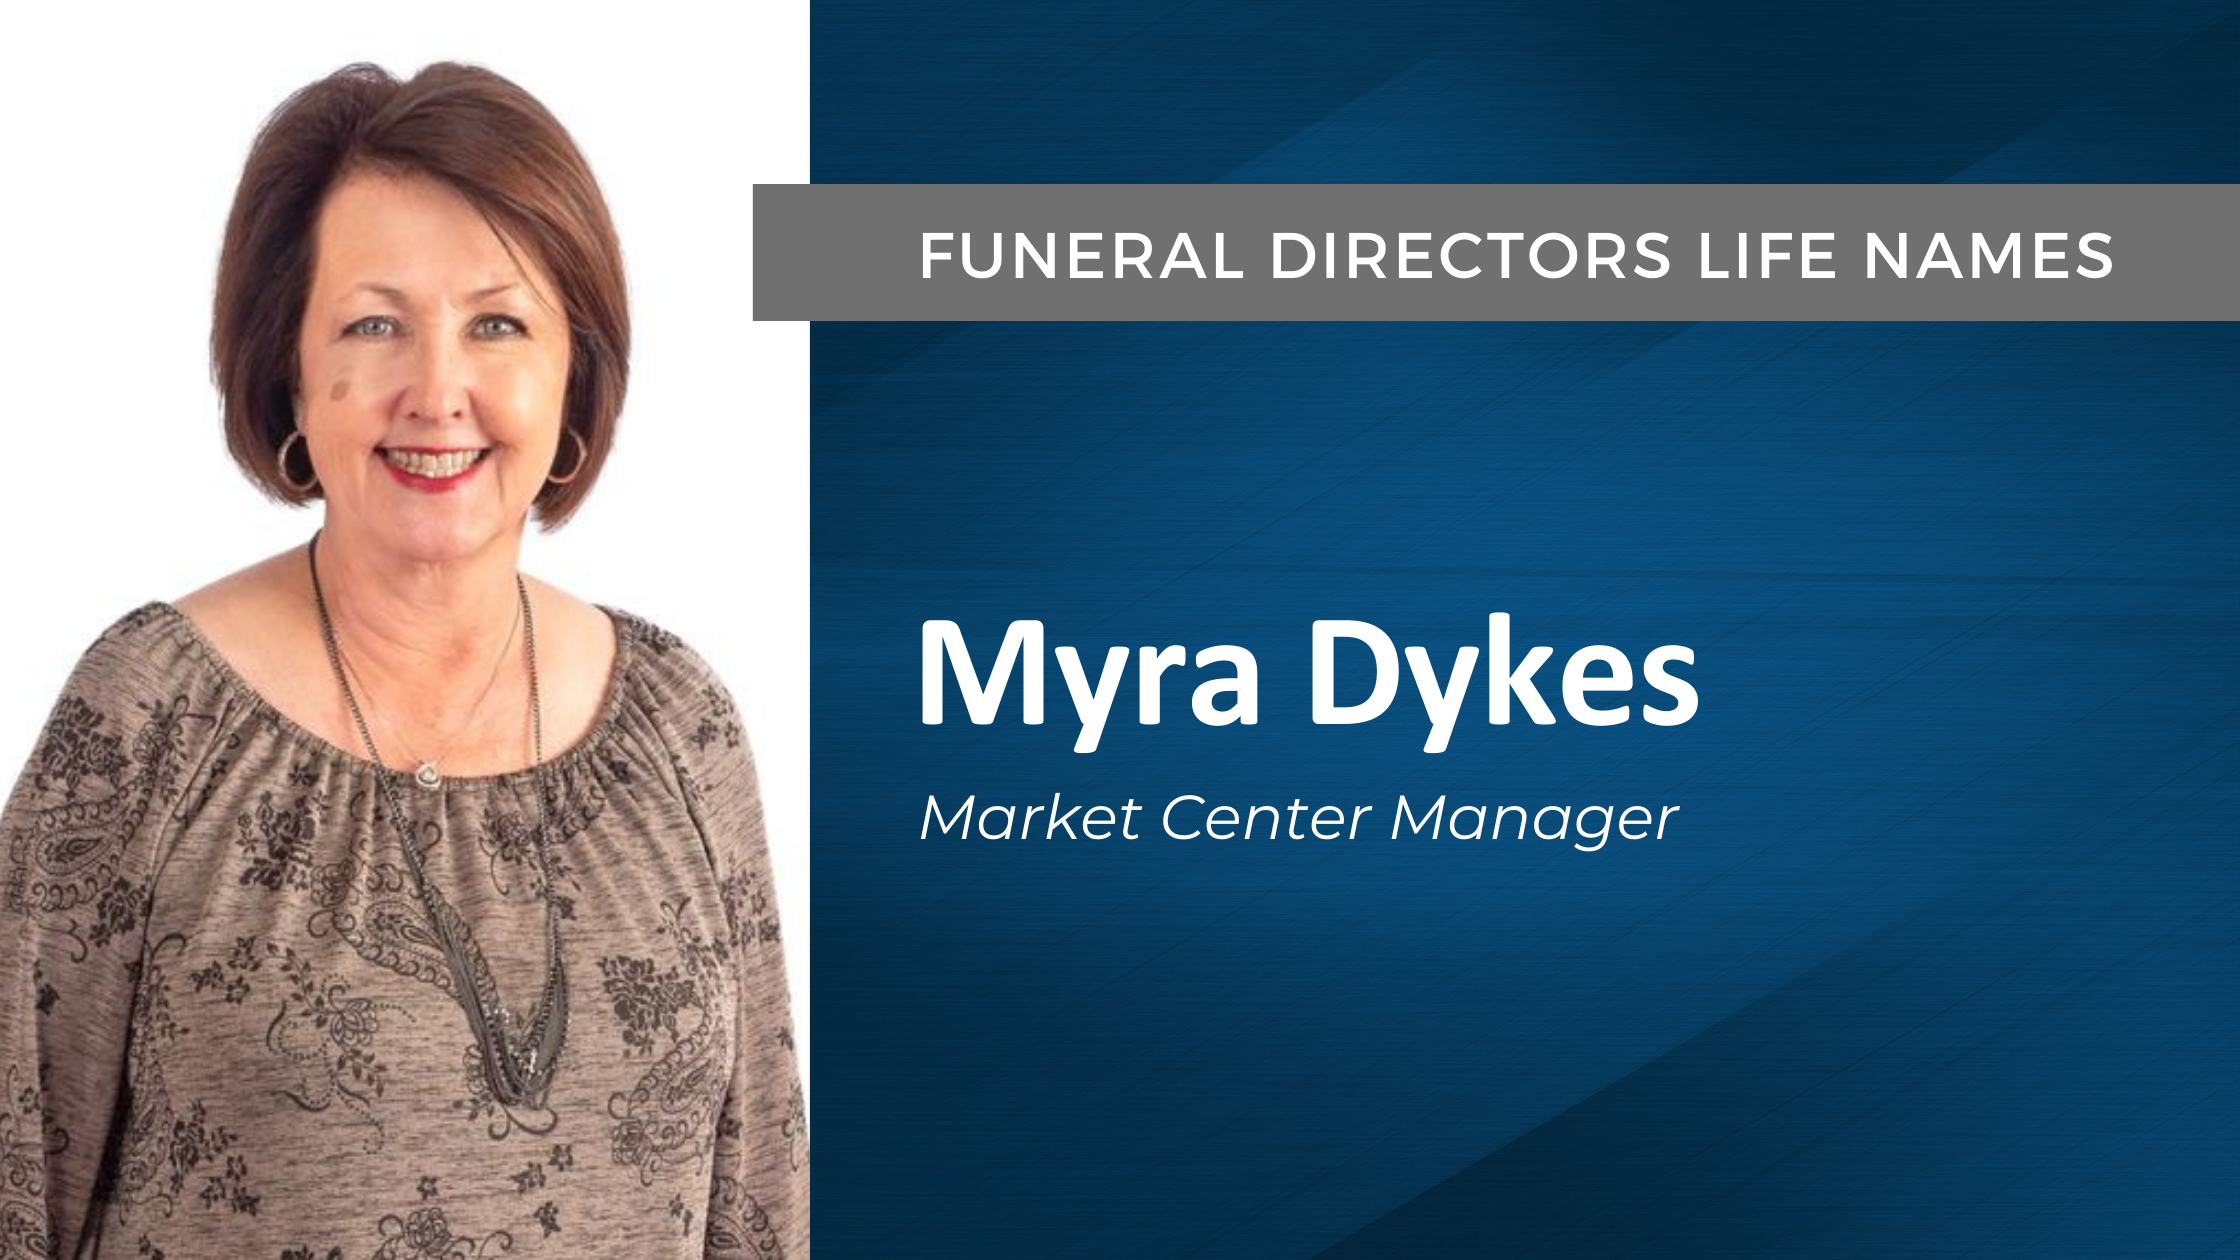 Myra Dykes